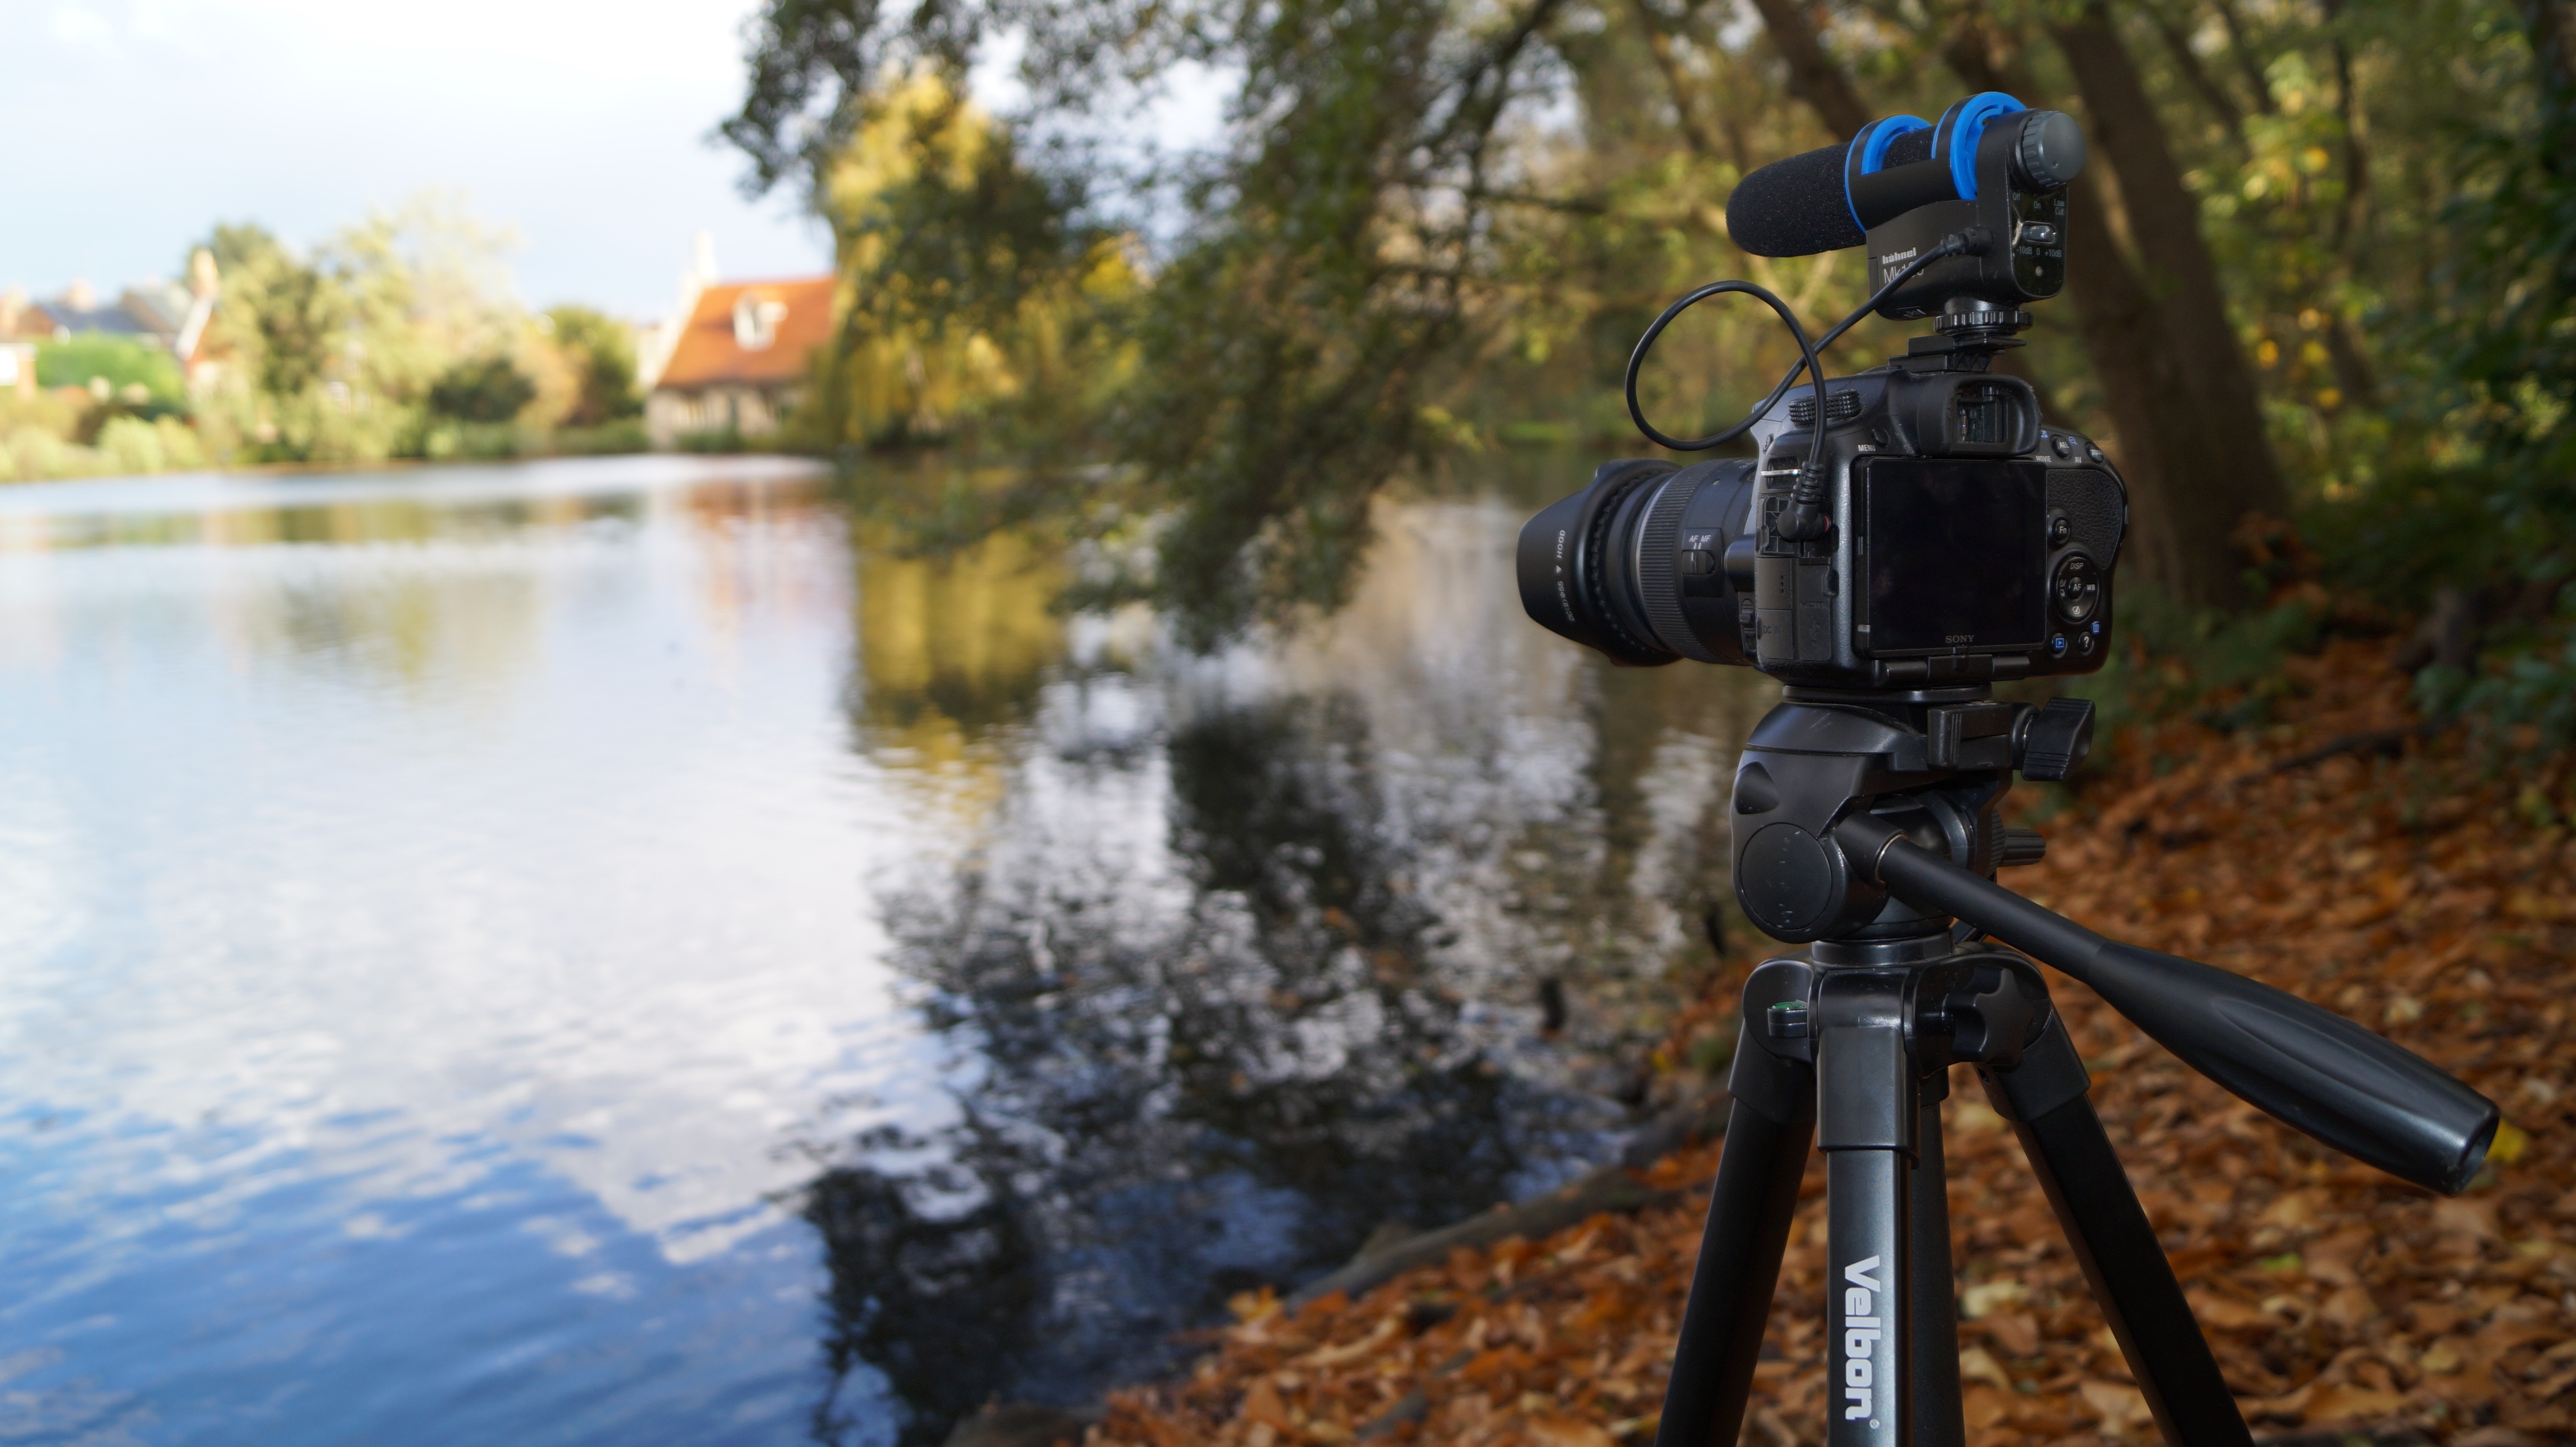 Setup to film and record around a lake by JOSBORNE_